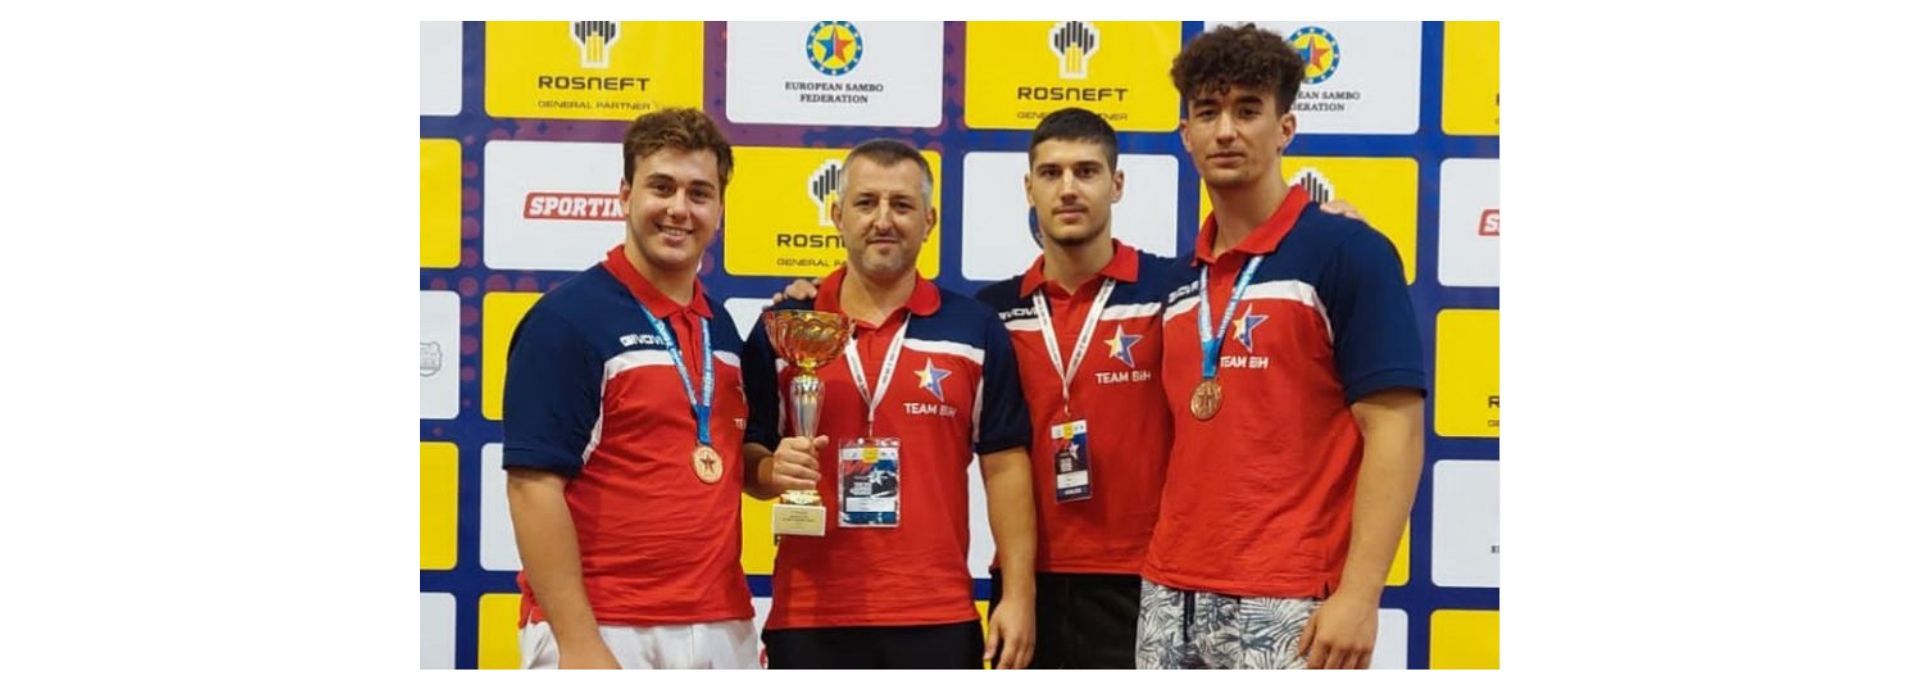 Predstavnici Bosne i Hercegovine na Evropskom sambo prvenstvu osvojili dvije bronzane medalje